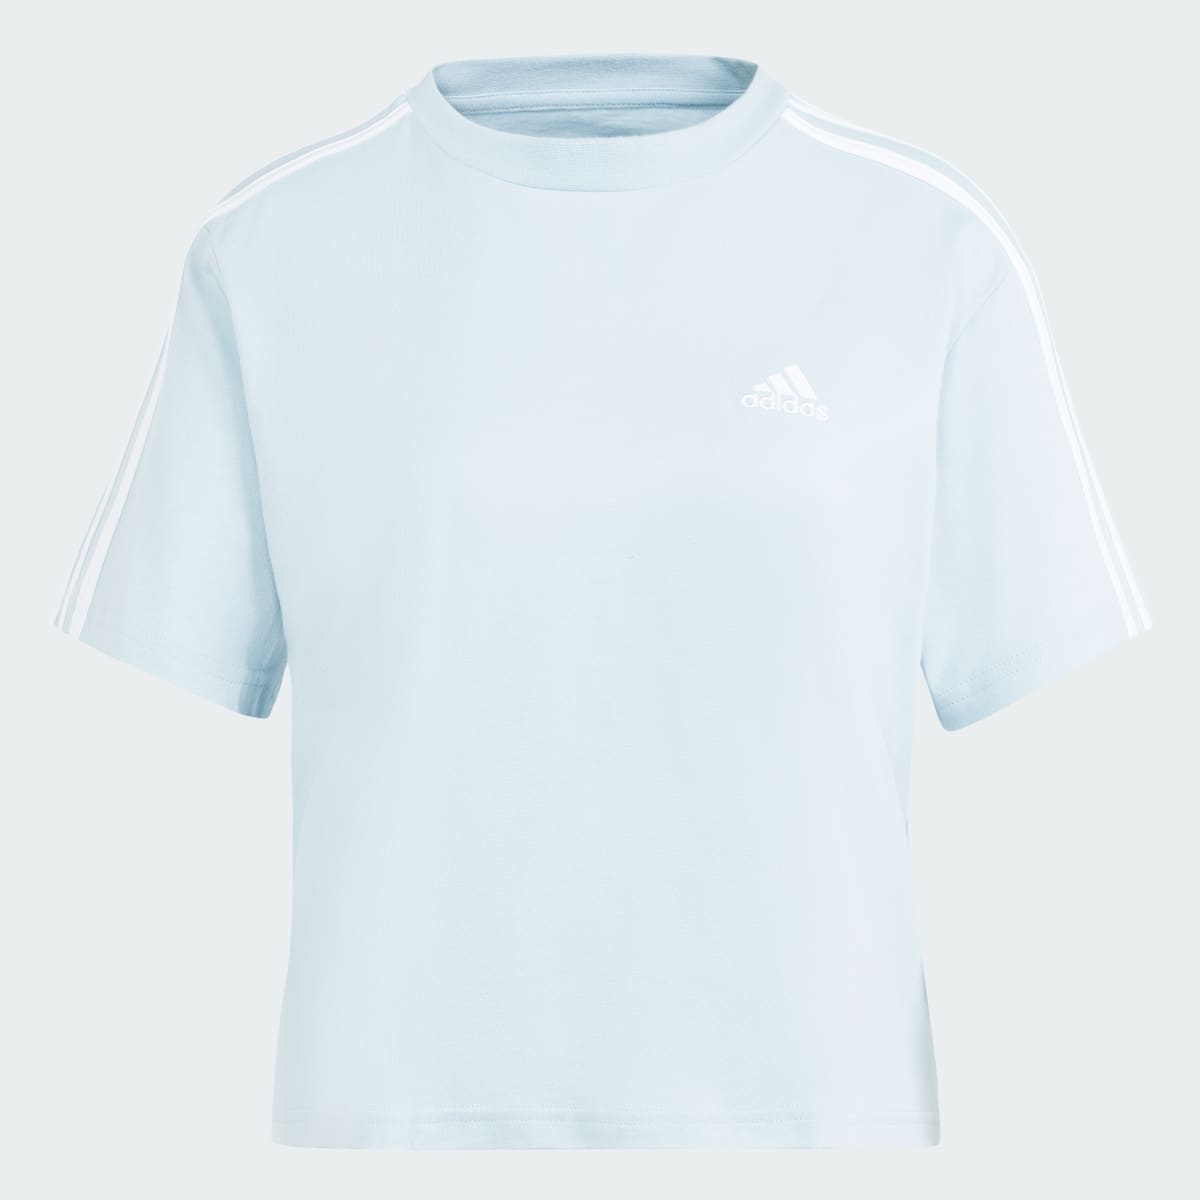 Adidas T-shirt Essentials 3-Stripes Single Jersey Crop. 5